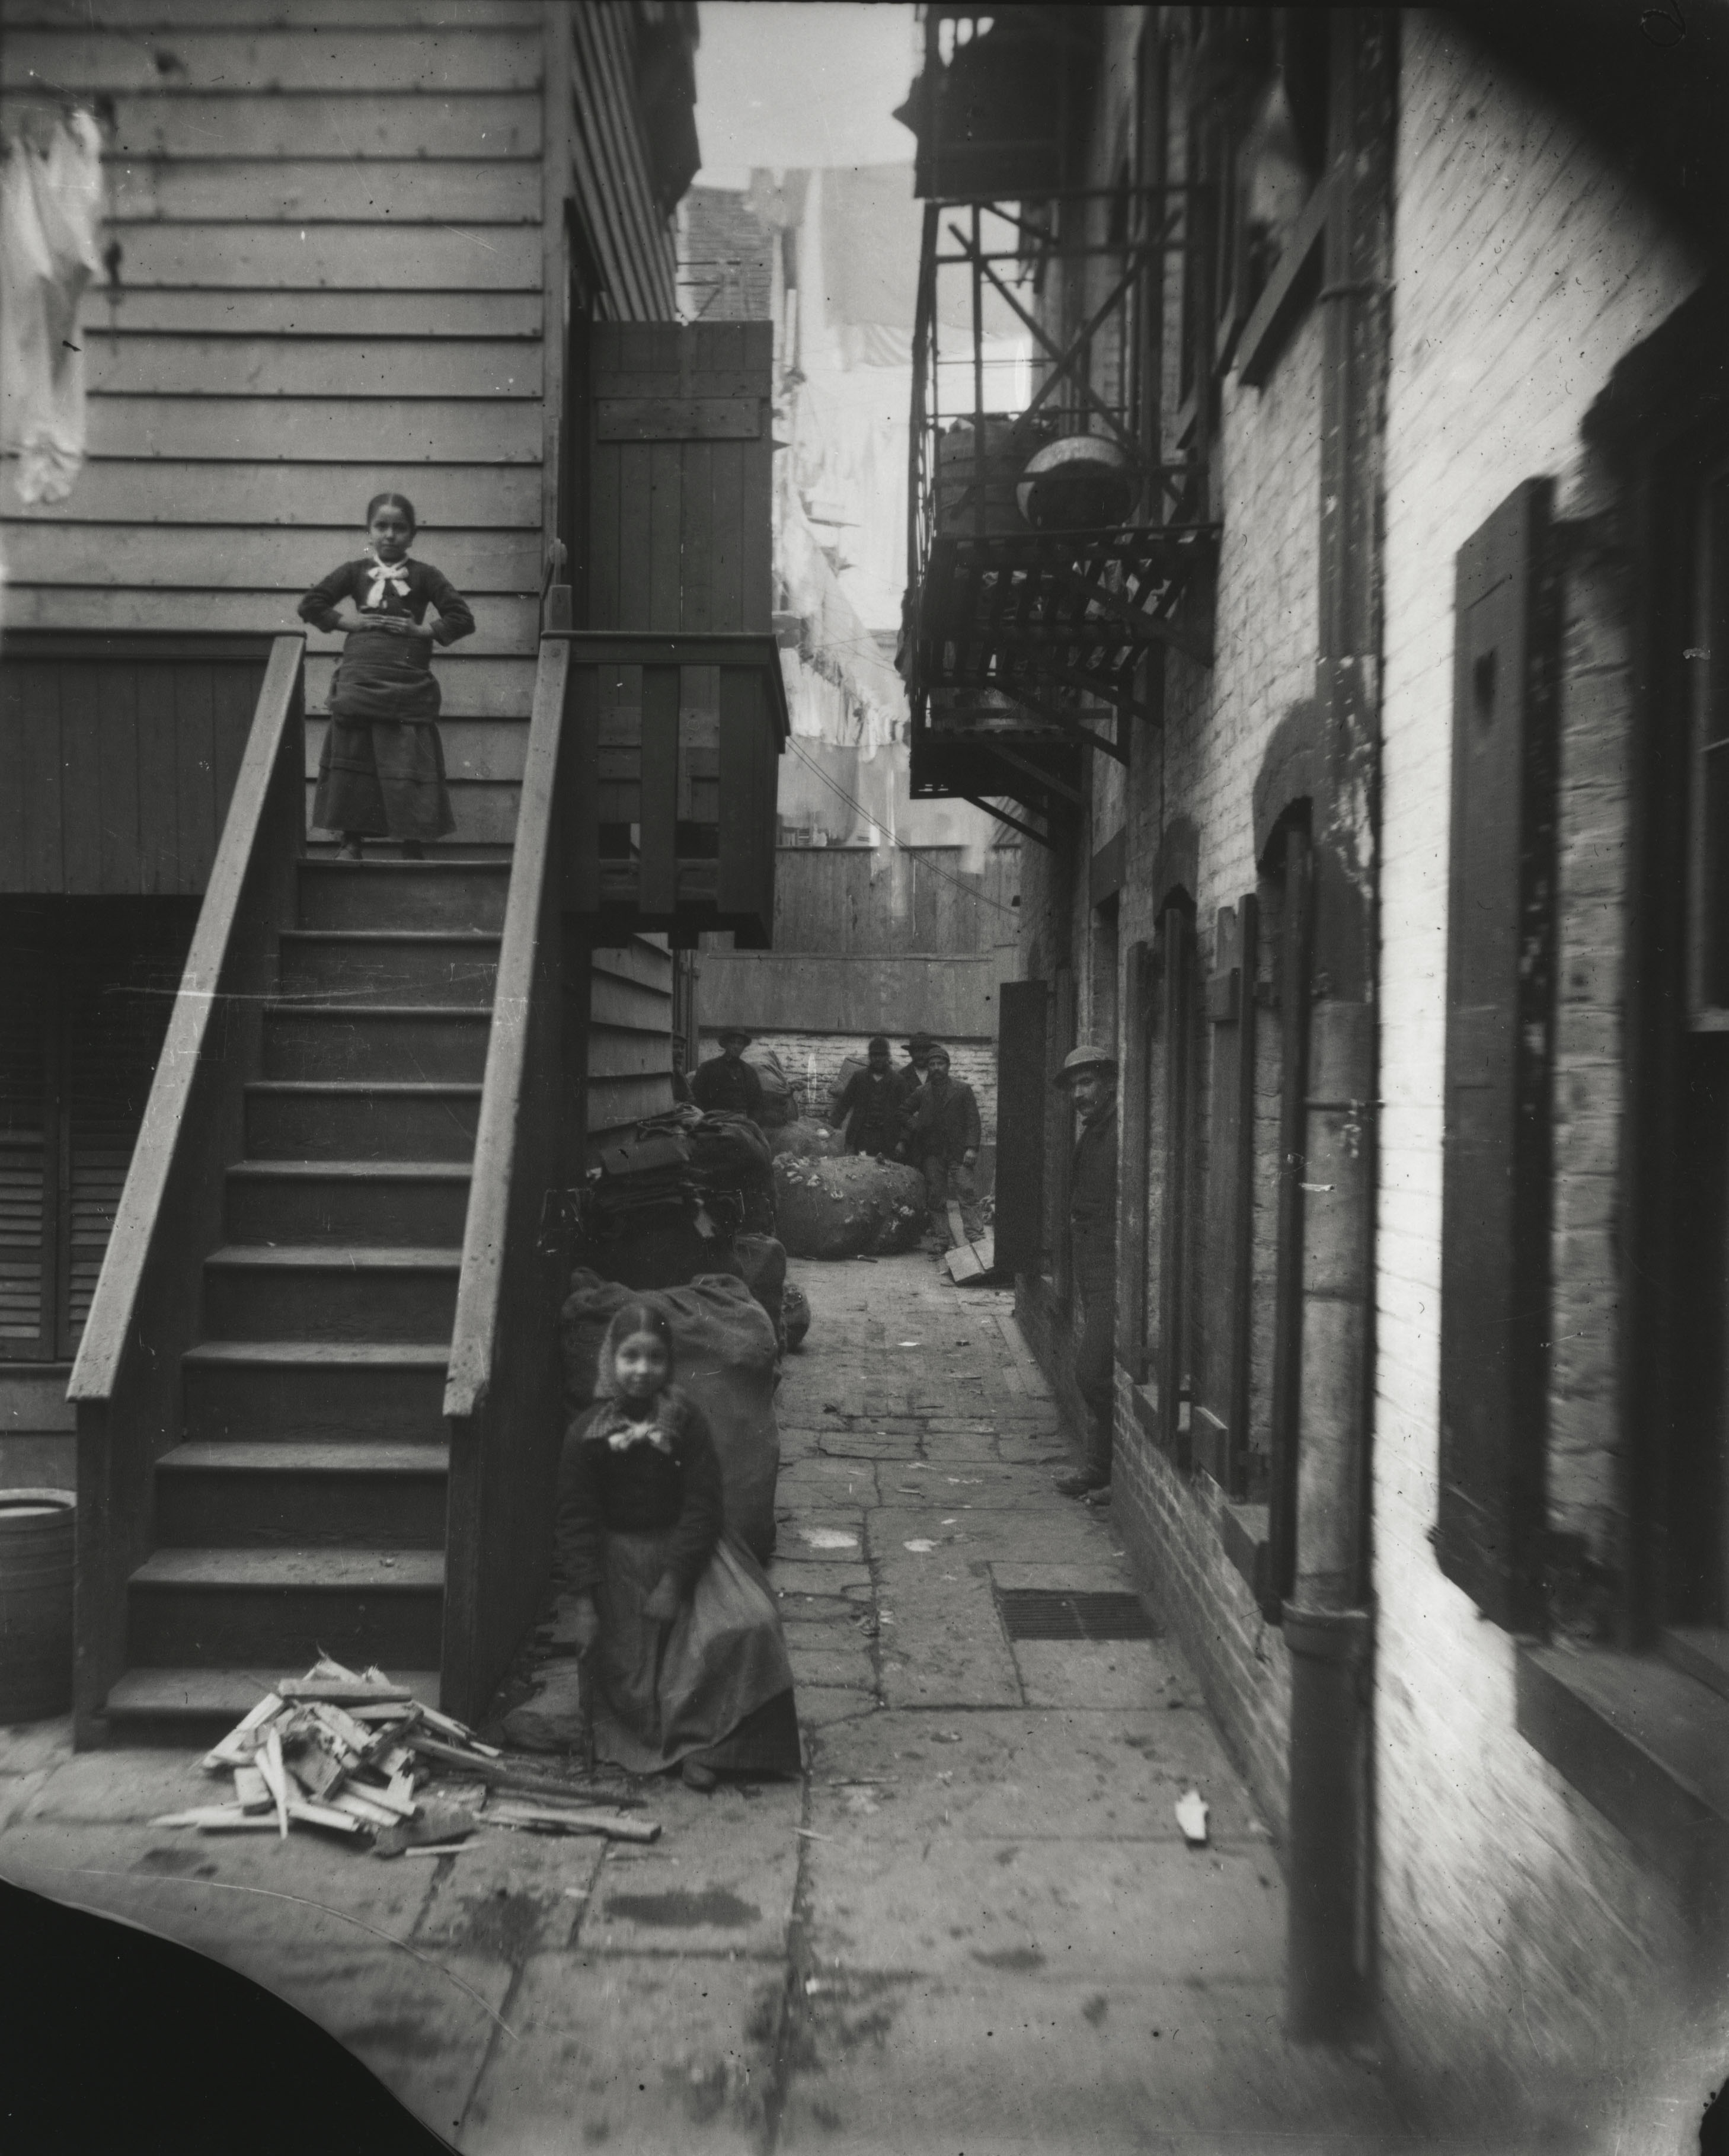 A Slum City For Slum People: Jacob Riis’ Photos Of New York’s Other